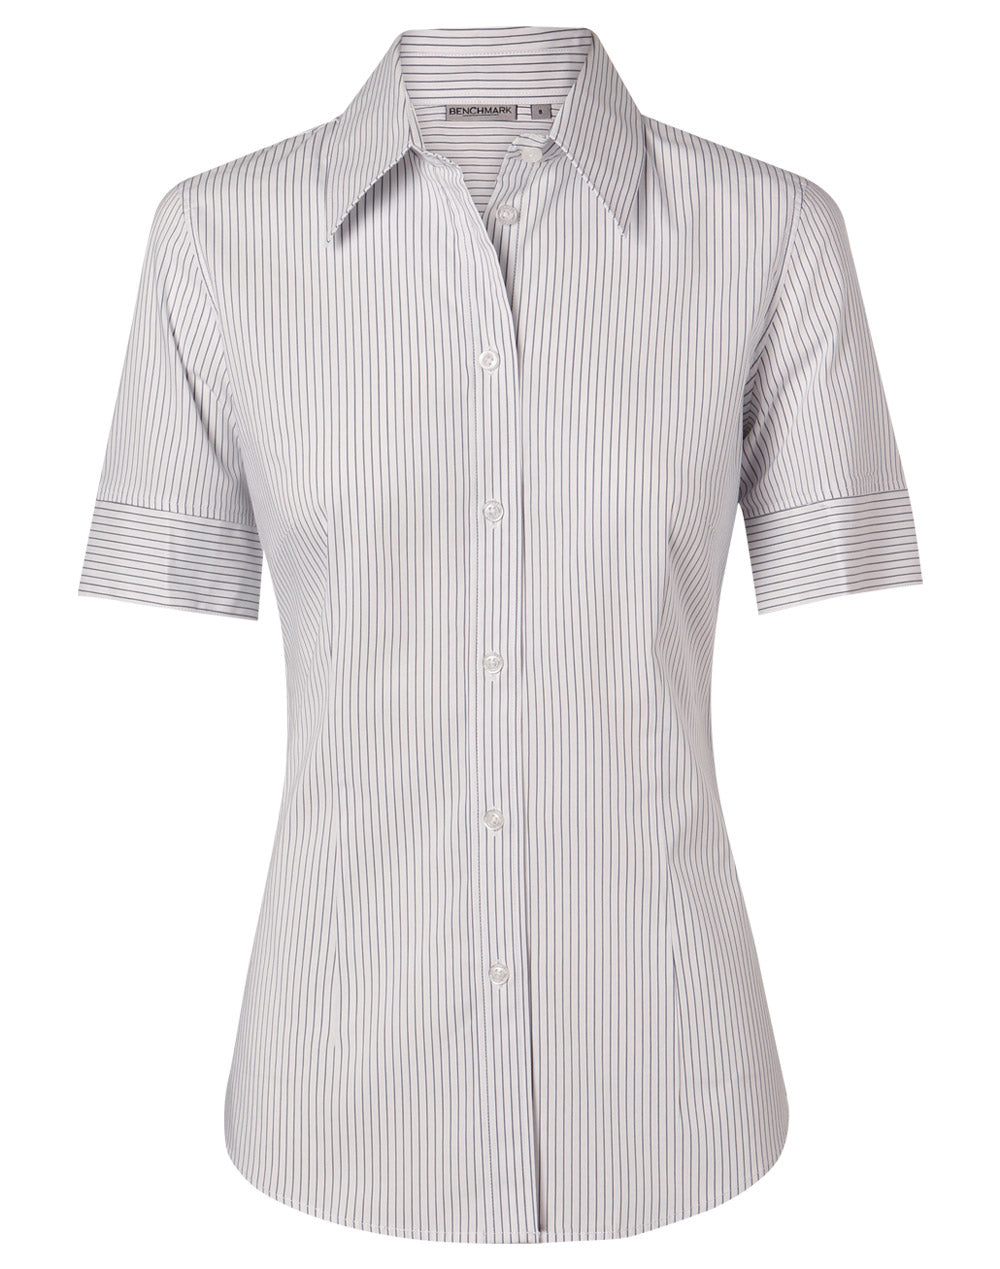 Benchmark M8200S Women's Ticking Stripe Short Sleeve Shirt